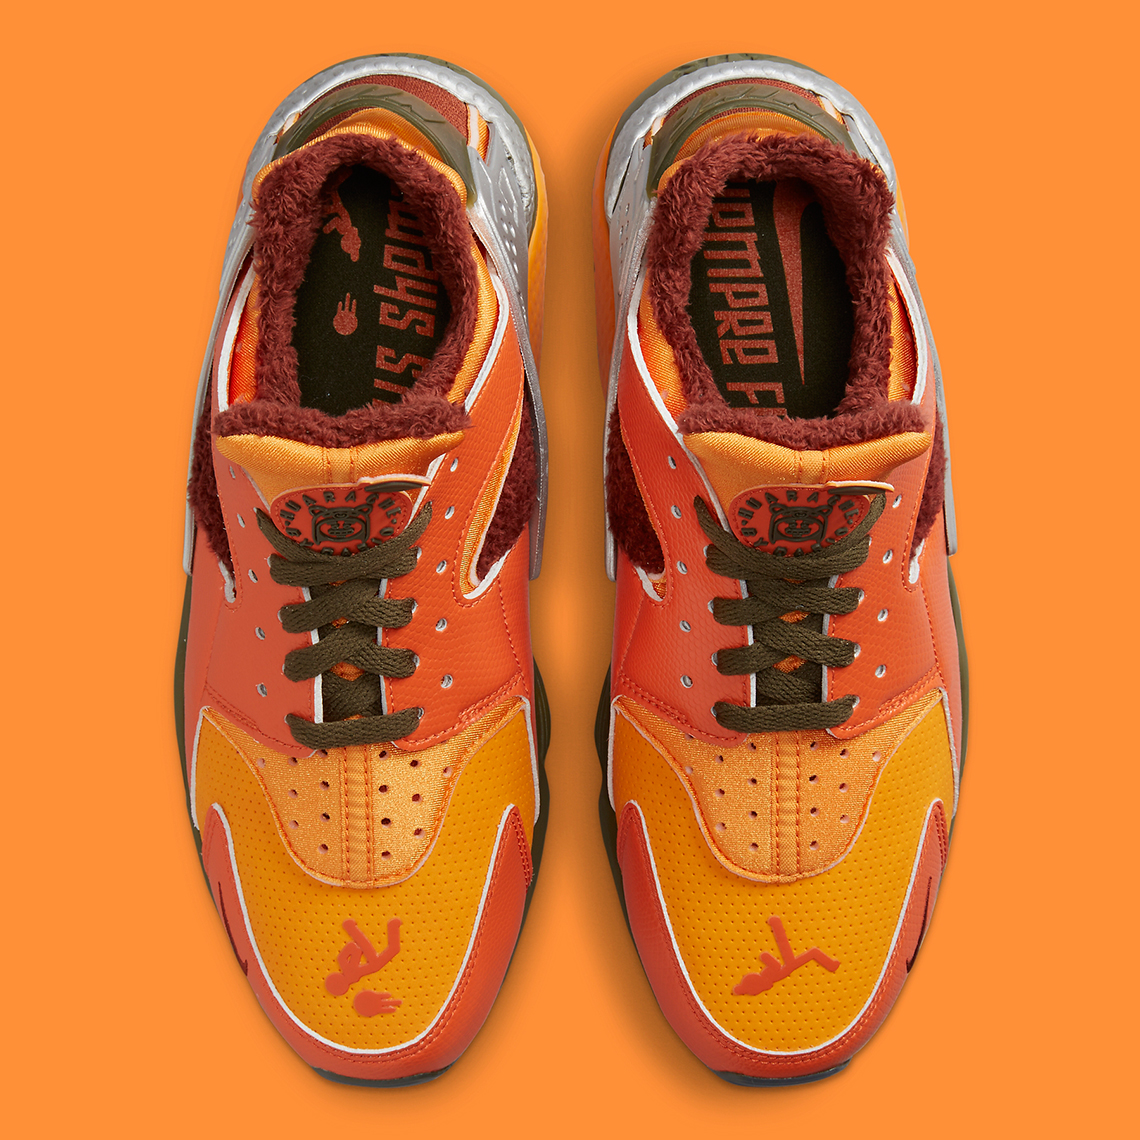 Size+11+-+Nike+Air+Huarache+Firewood+Orange for sale online